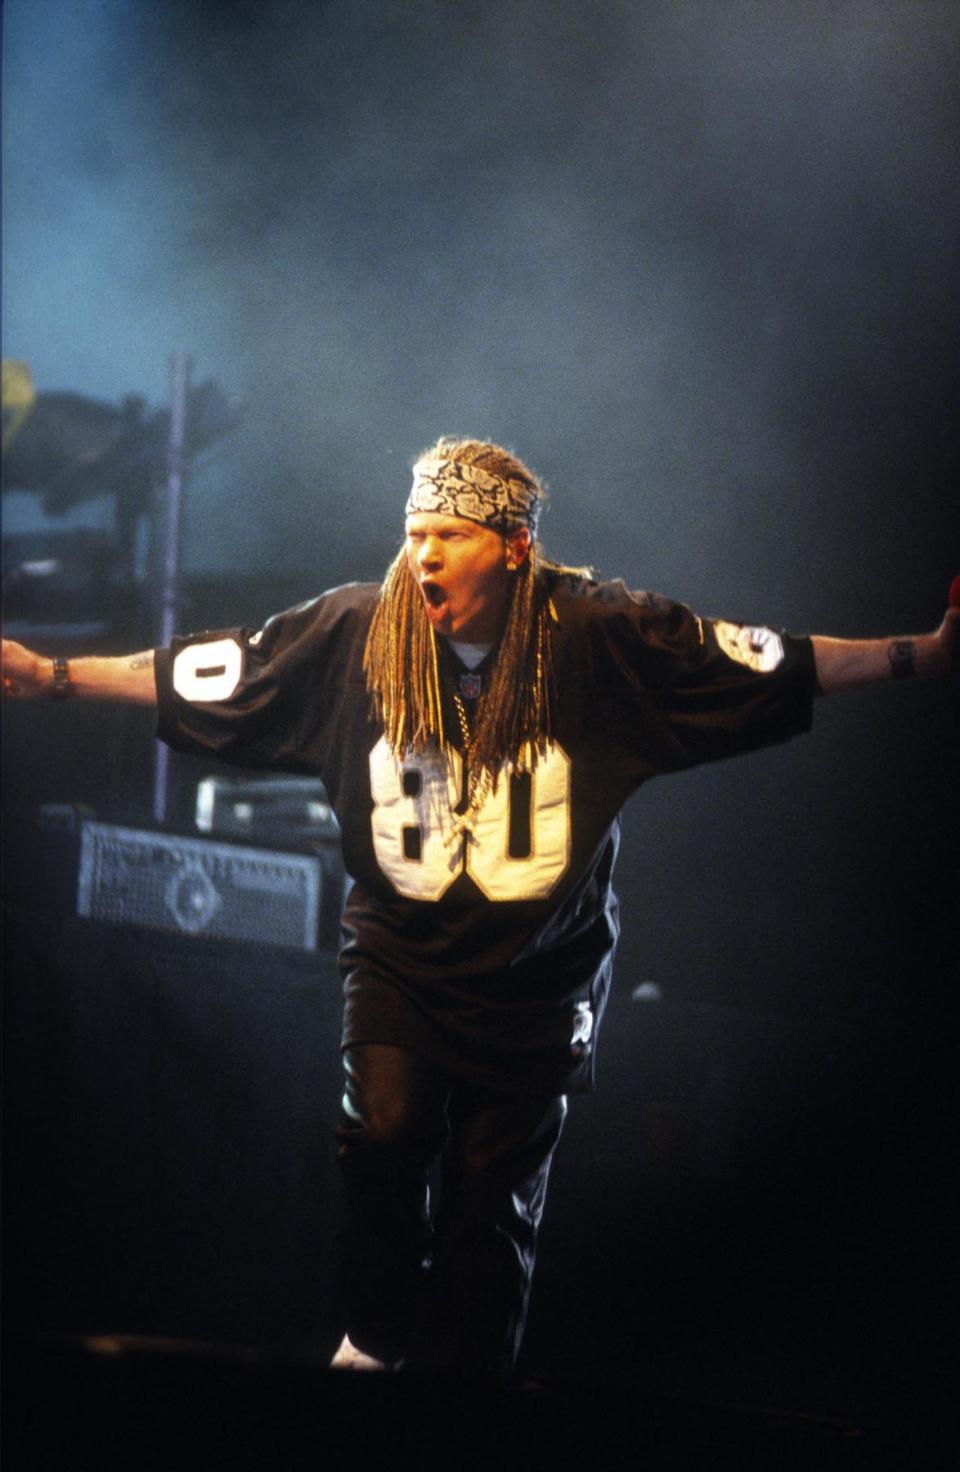 Guns N' Roses, Axl Rose, Pukkelpop Festival, Hasselt, Belgium, 24/08/2002. (Photo by Gie Knaeps/Getty Images)